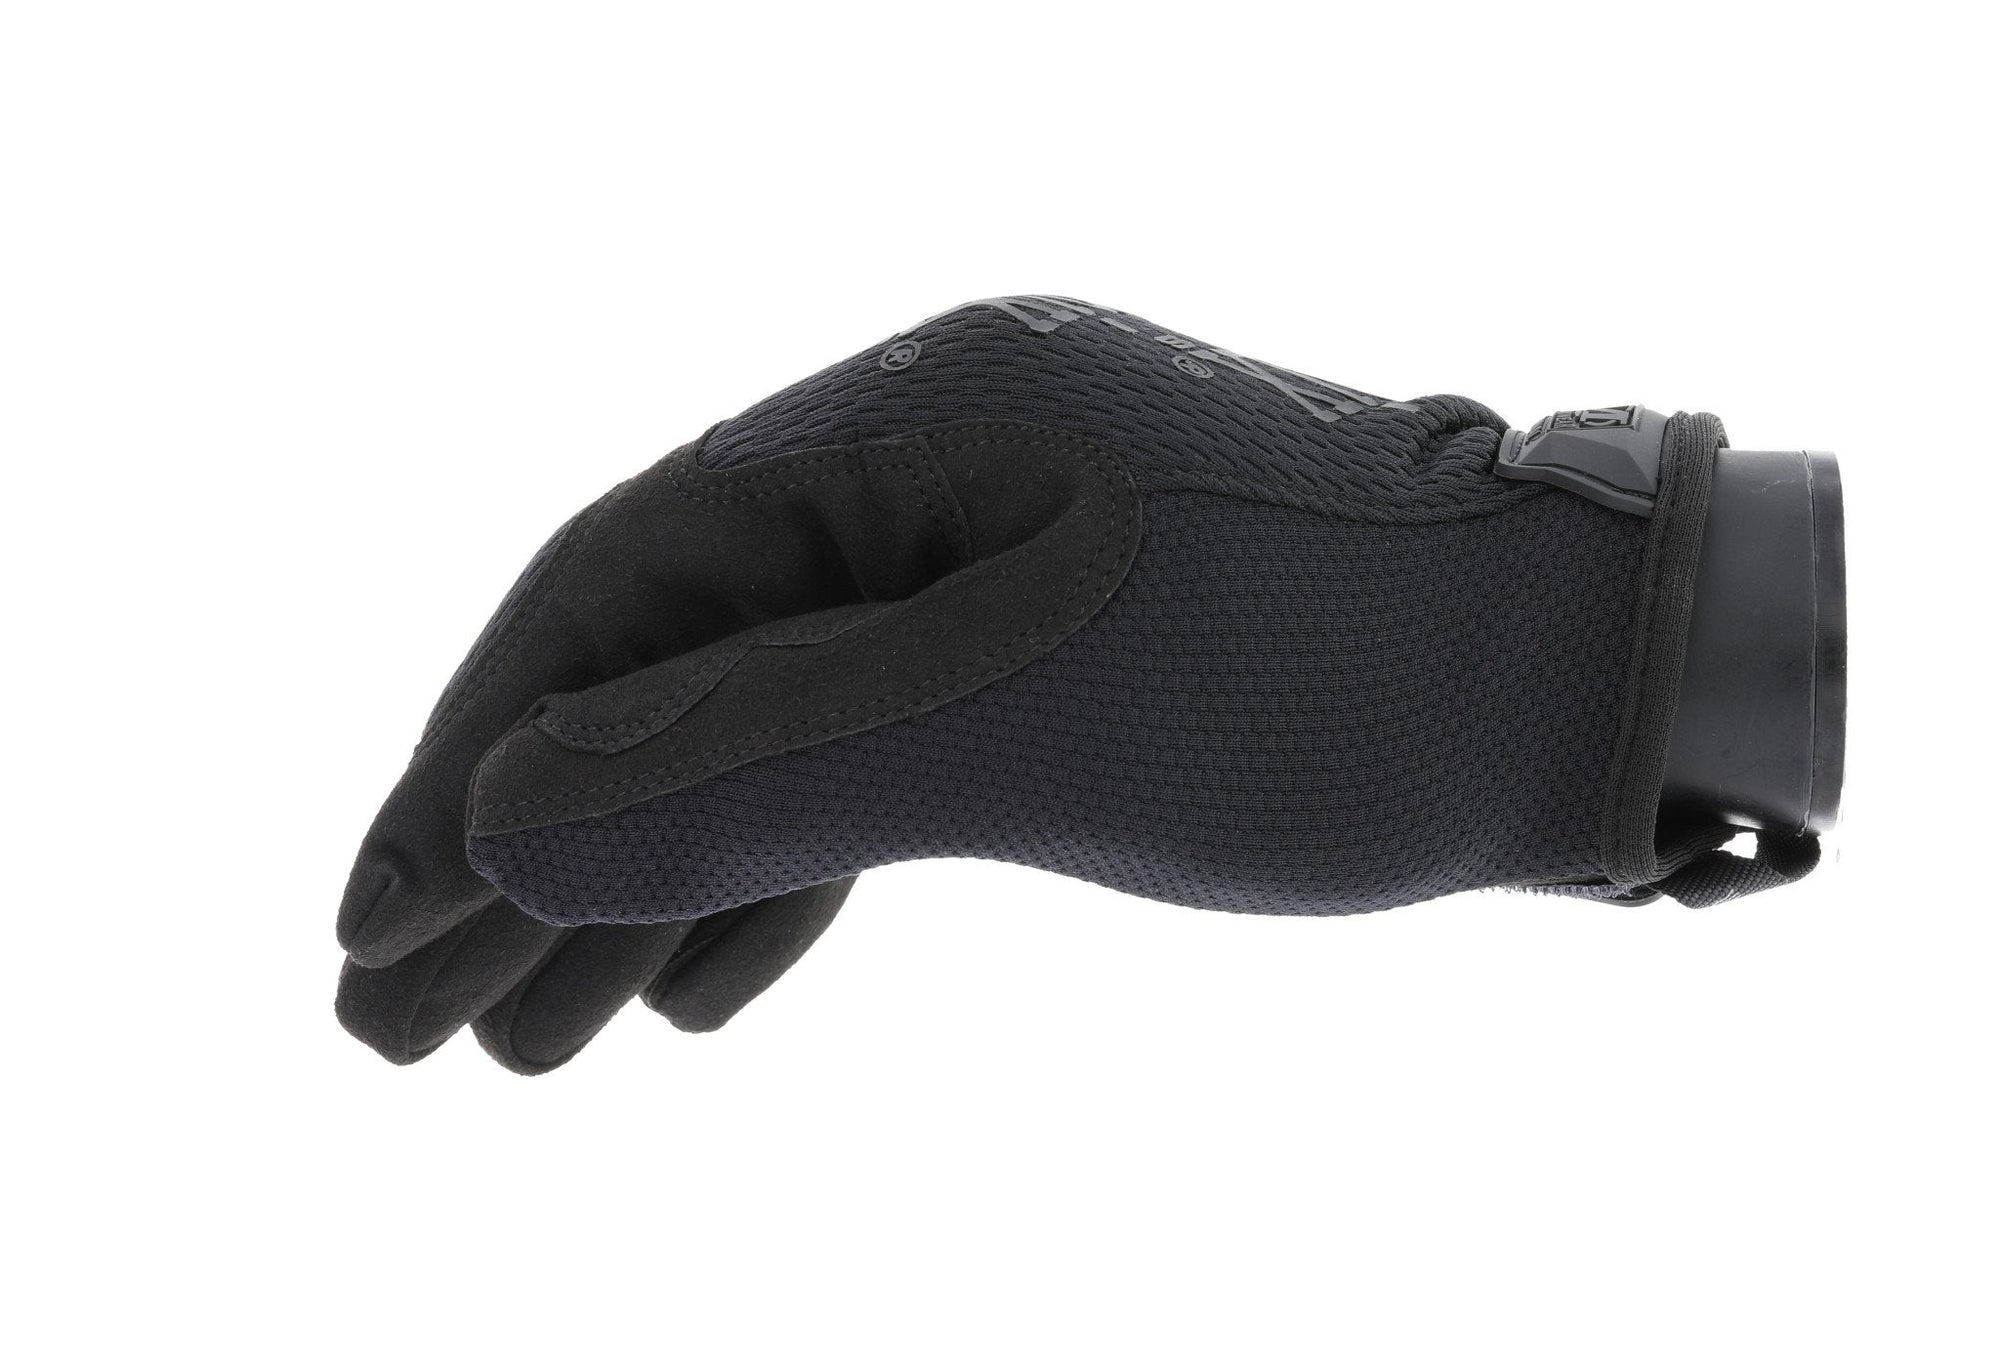 Mechanix Wear The Original Tactical Glove Covert Gloves Mechanix Wear Tactical Gear Supplier Tactical Distributors Australia